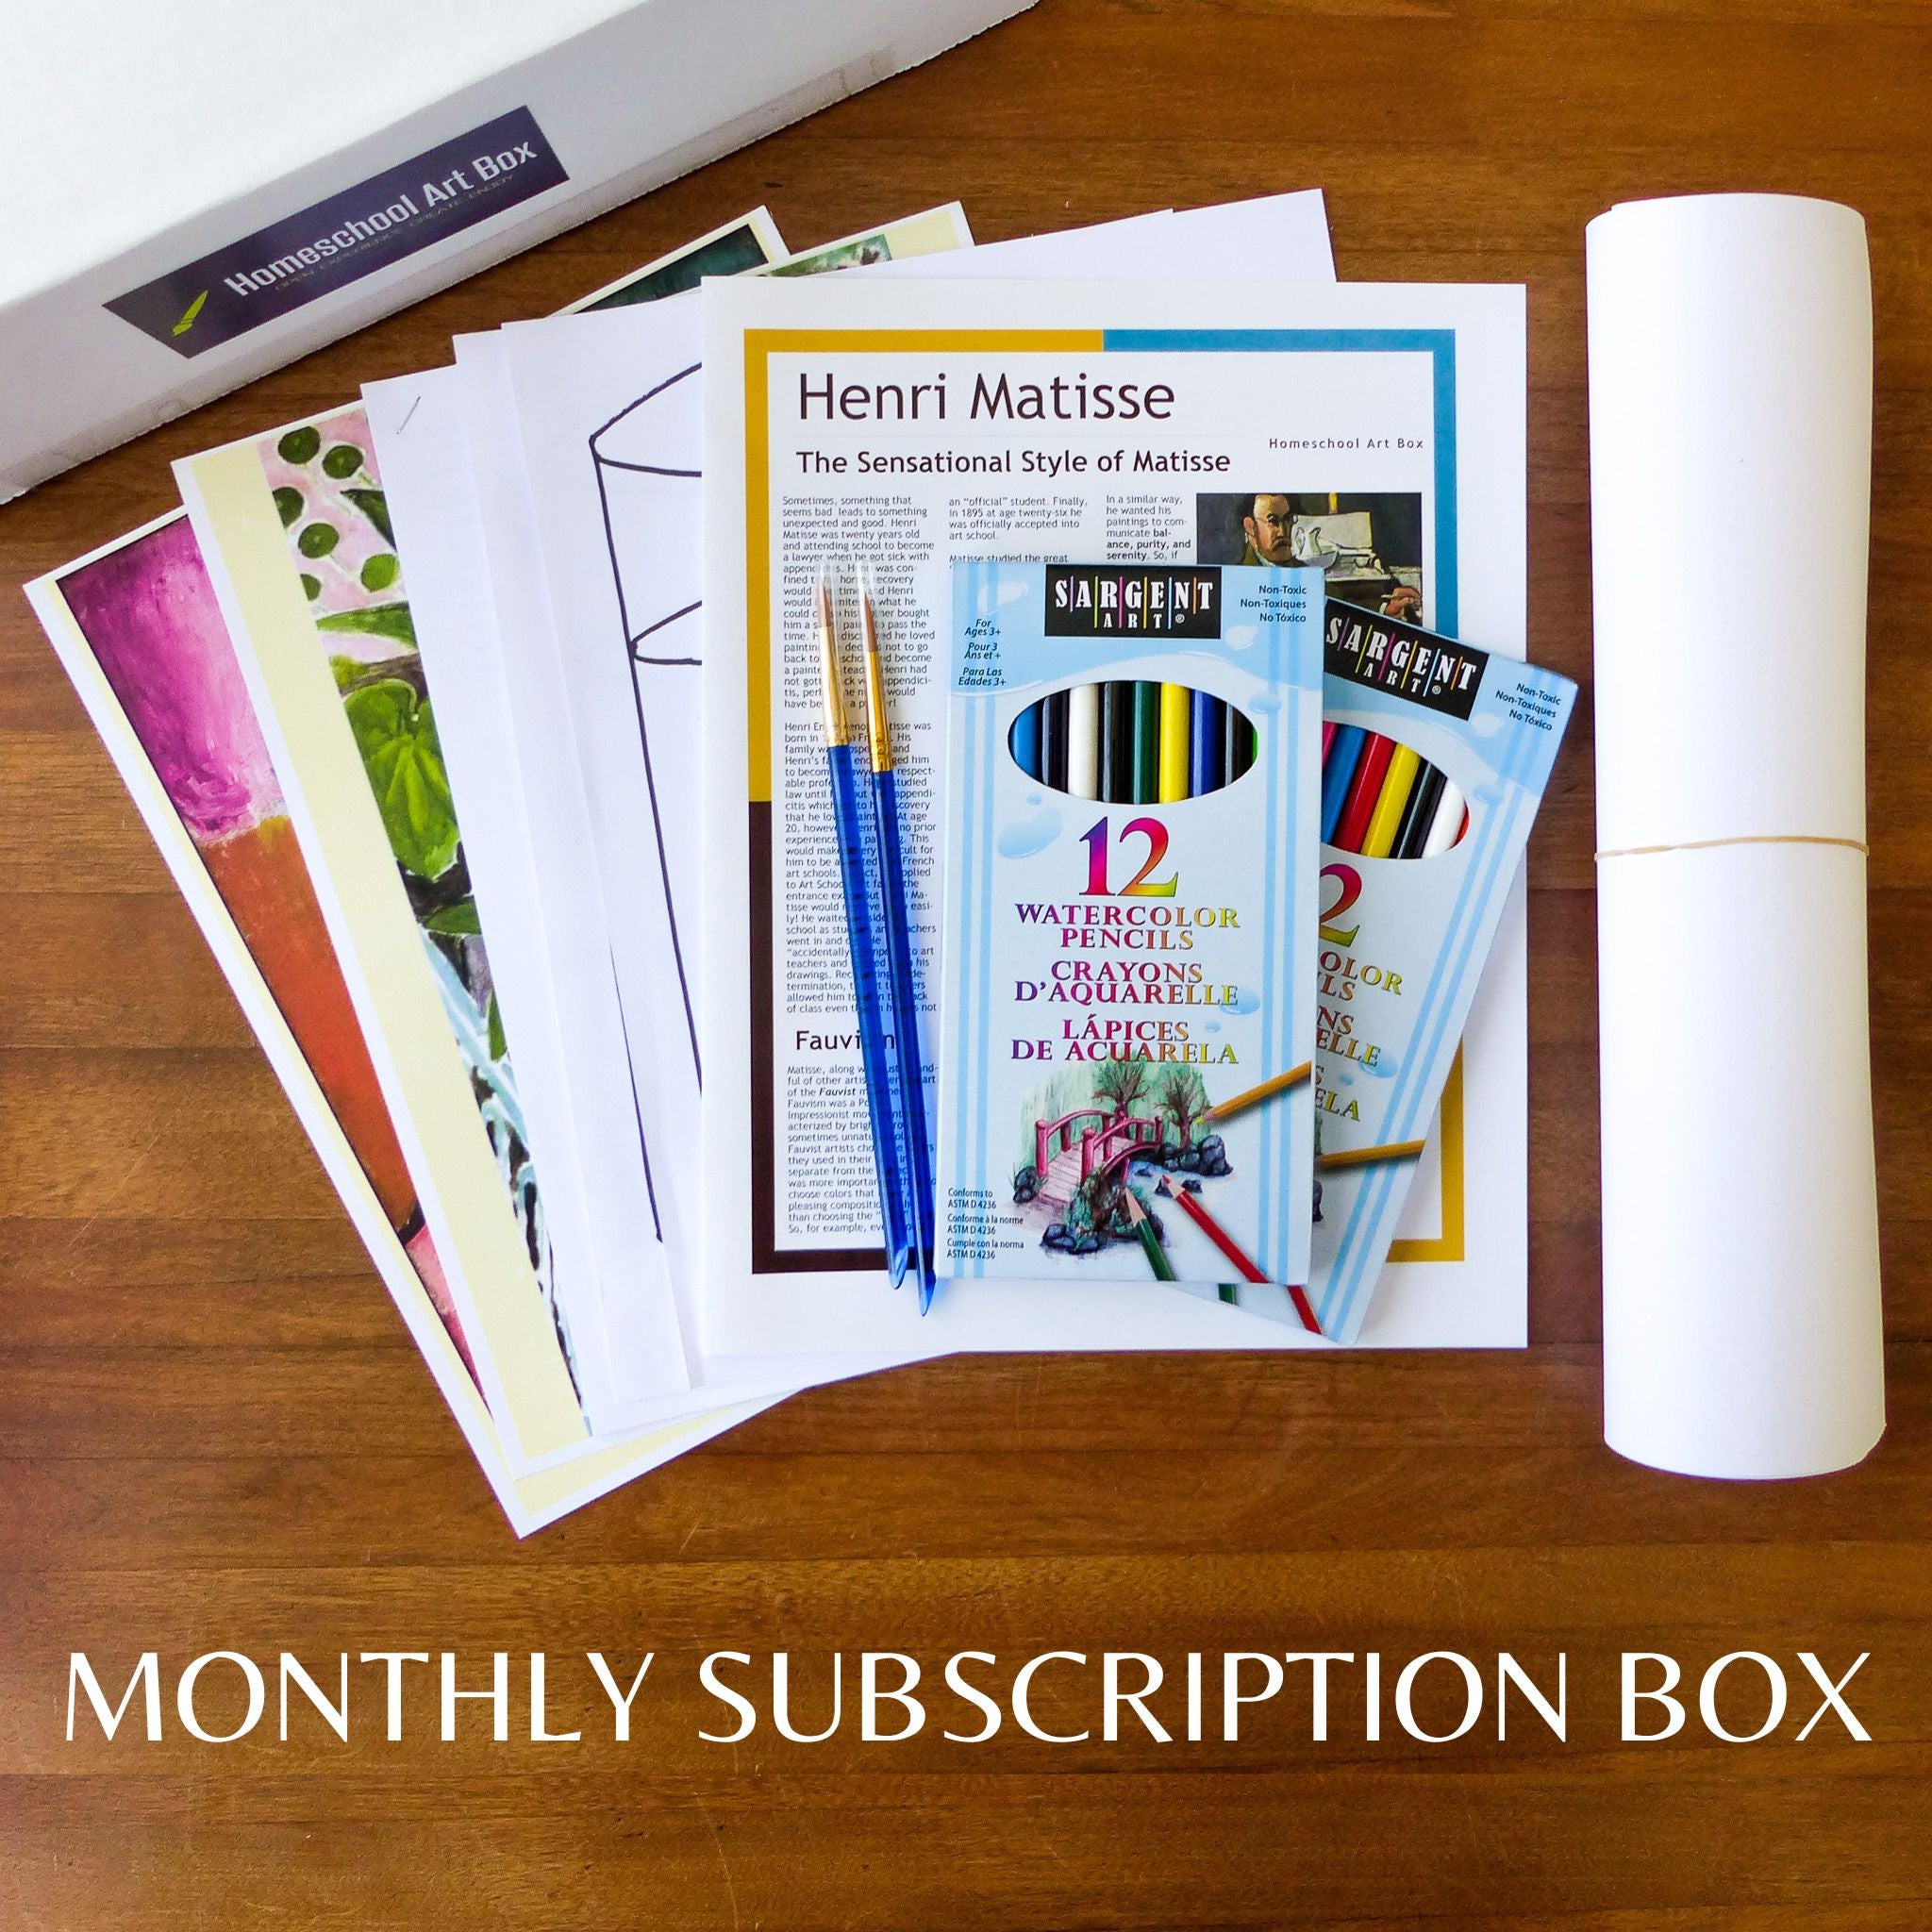 Elementary Artist Box Monthly - Classy Artist Box